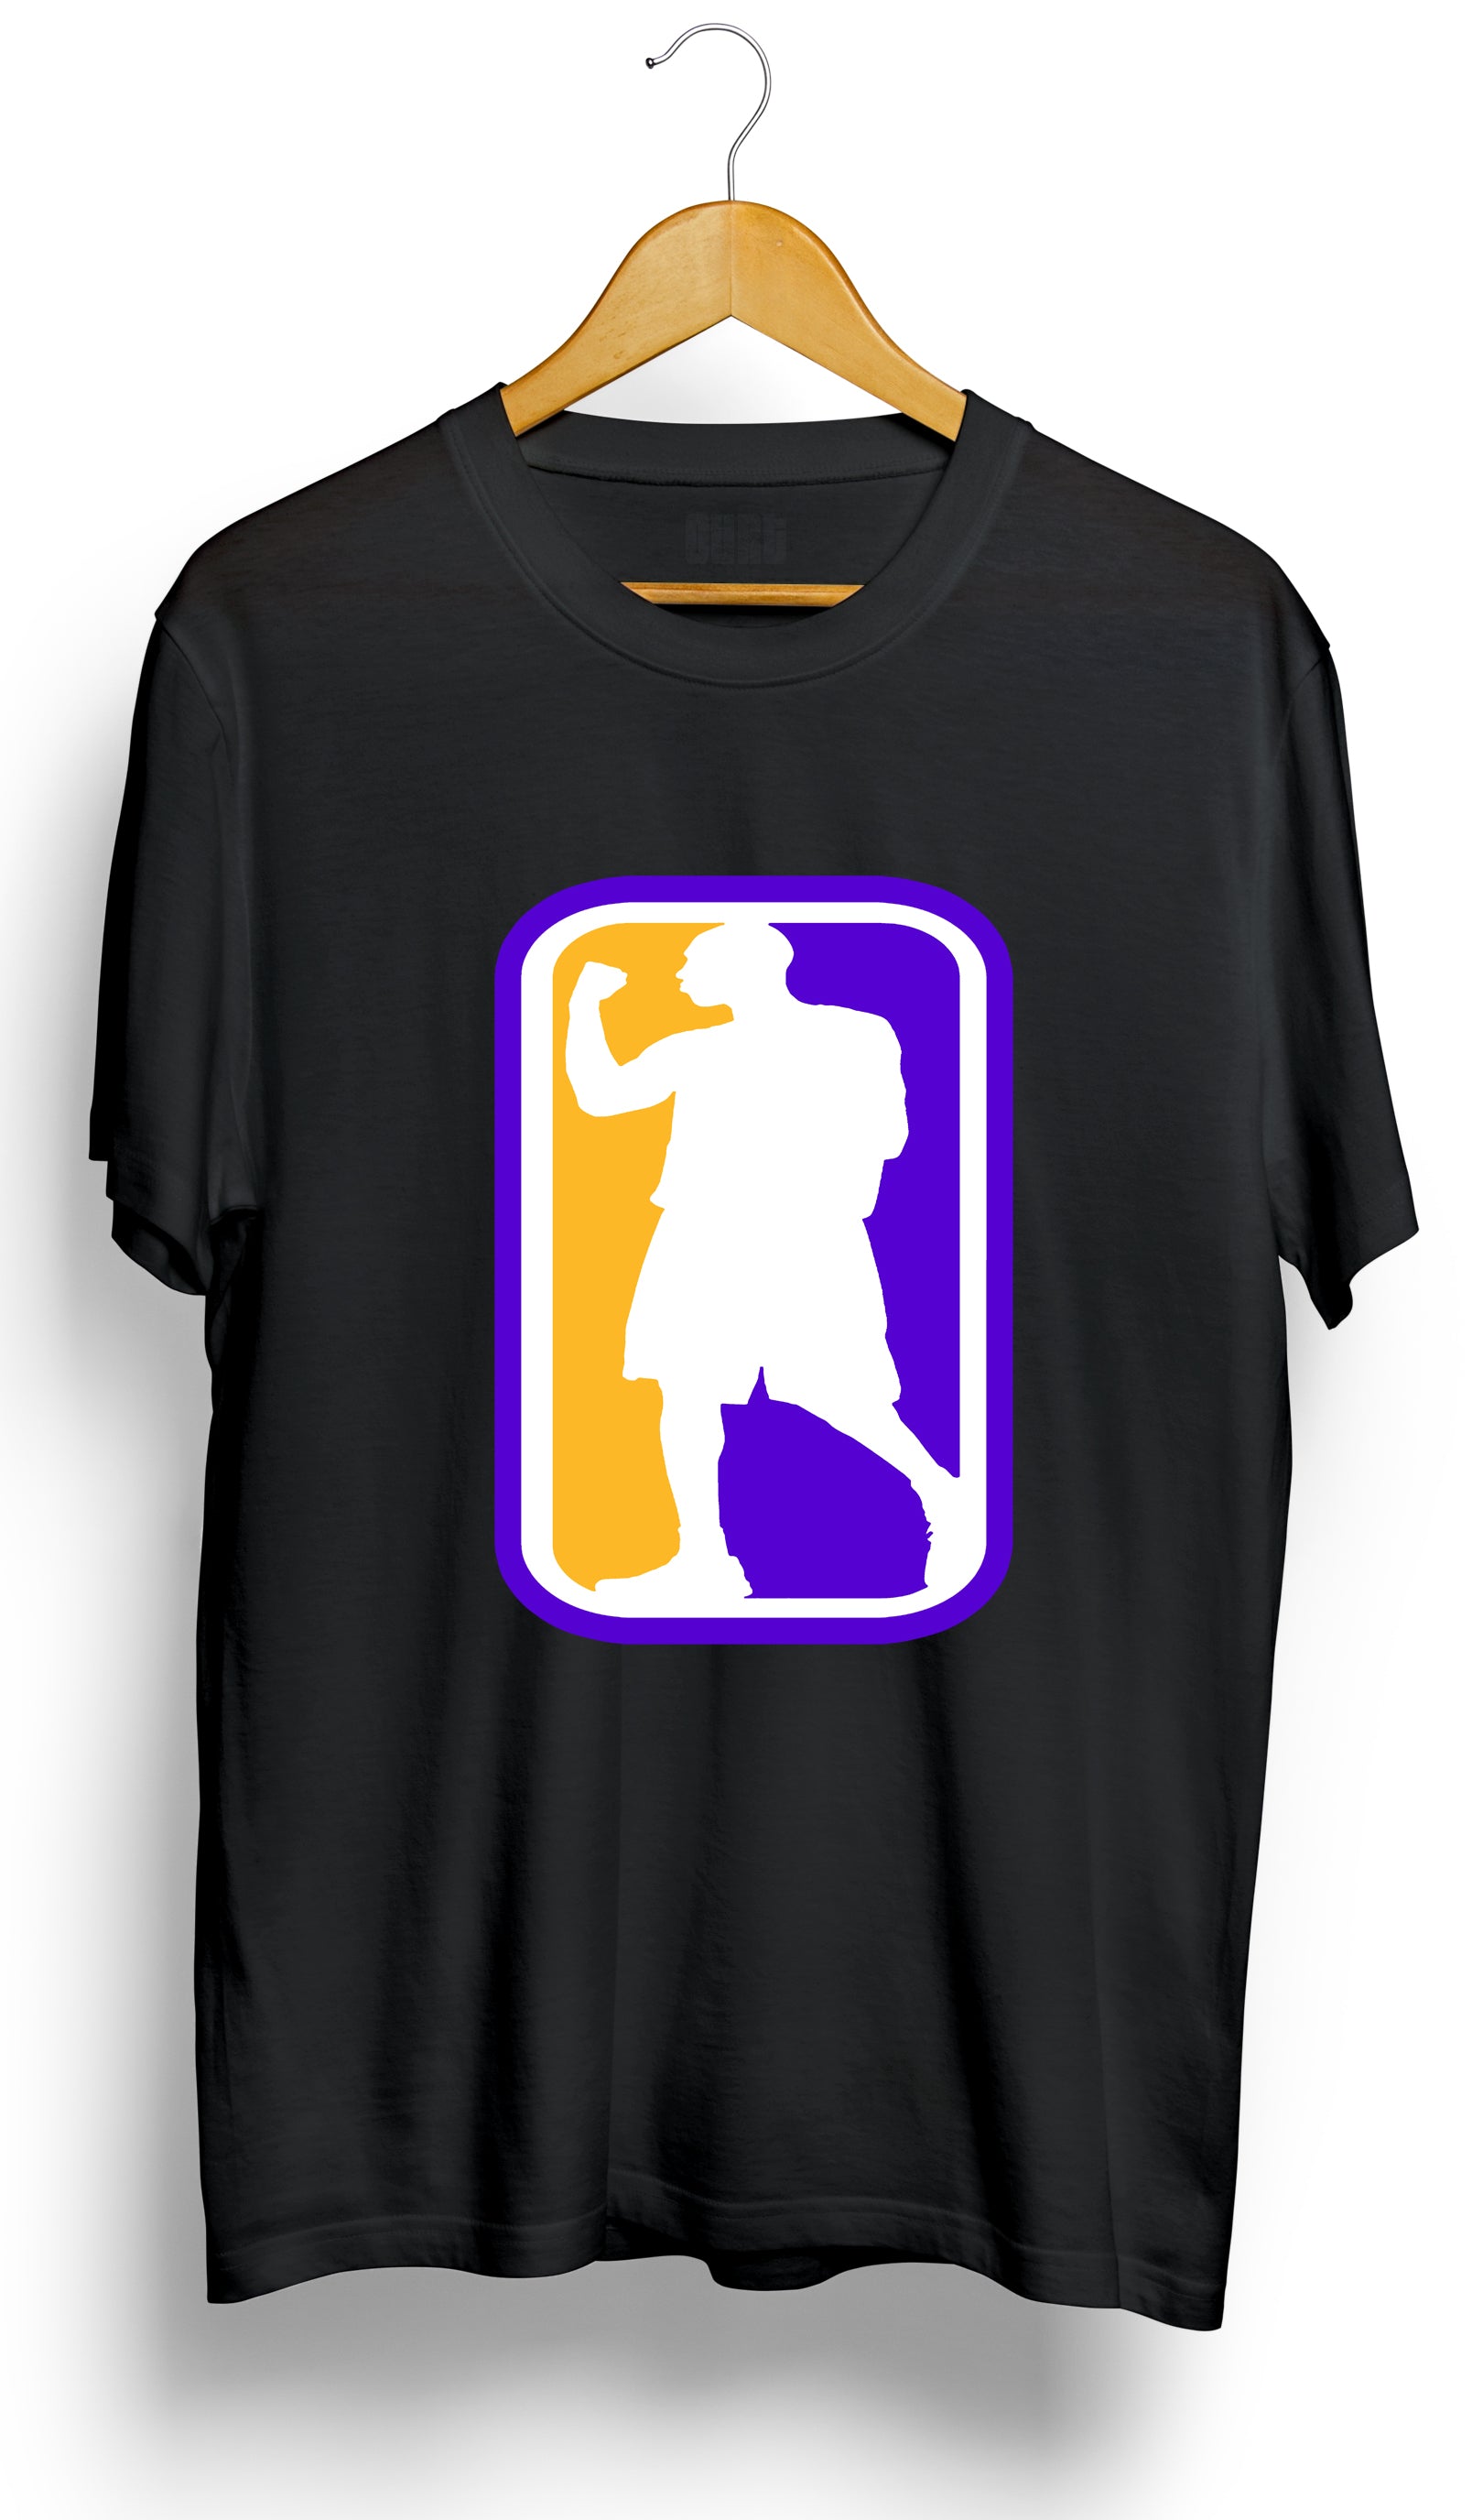 Kobe Bryant T shirt Design by ohnoes in Melbourne